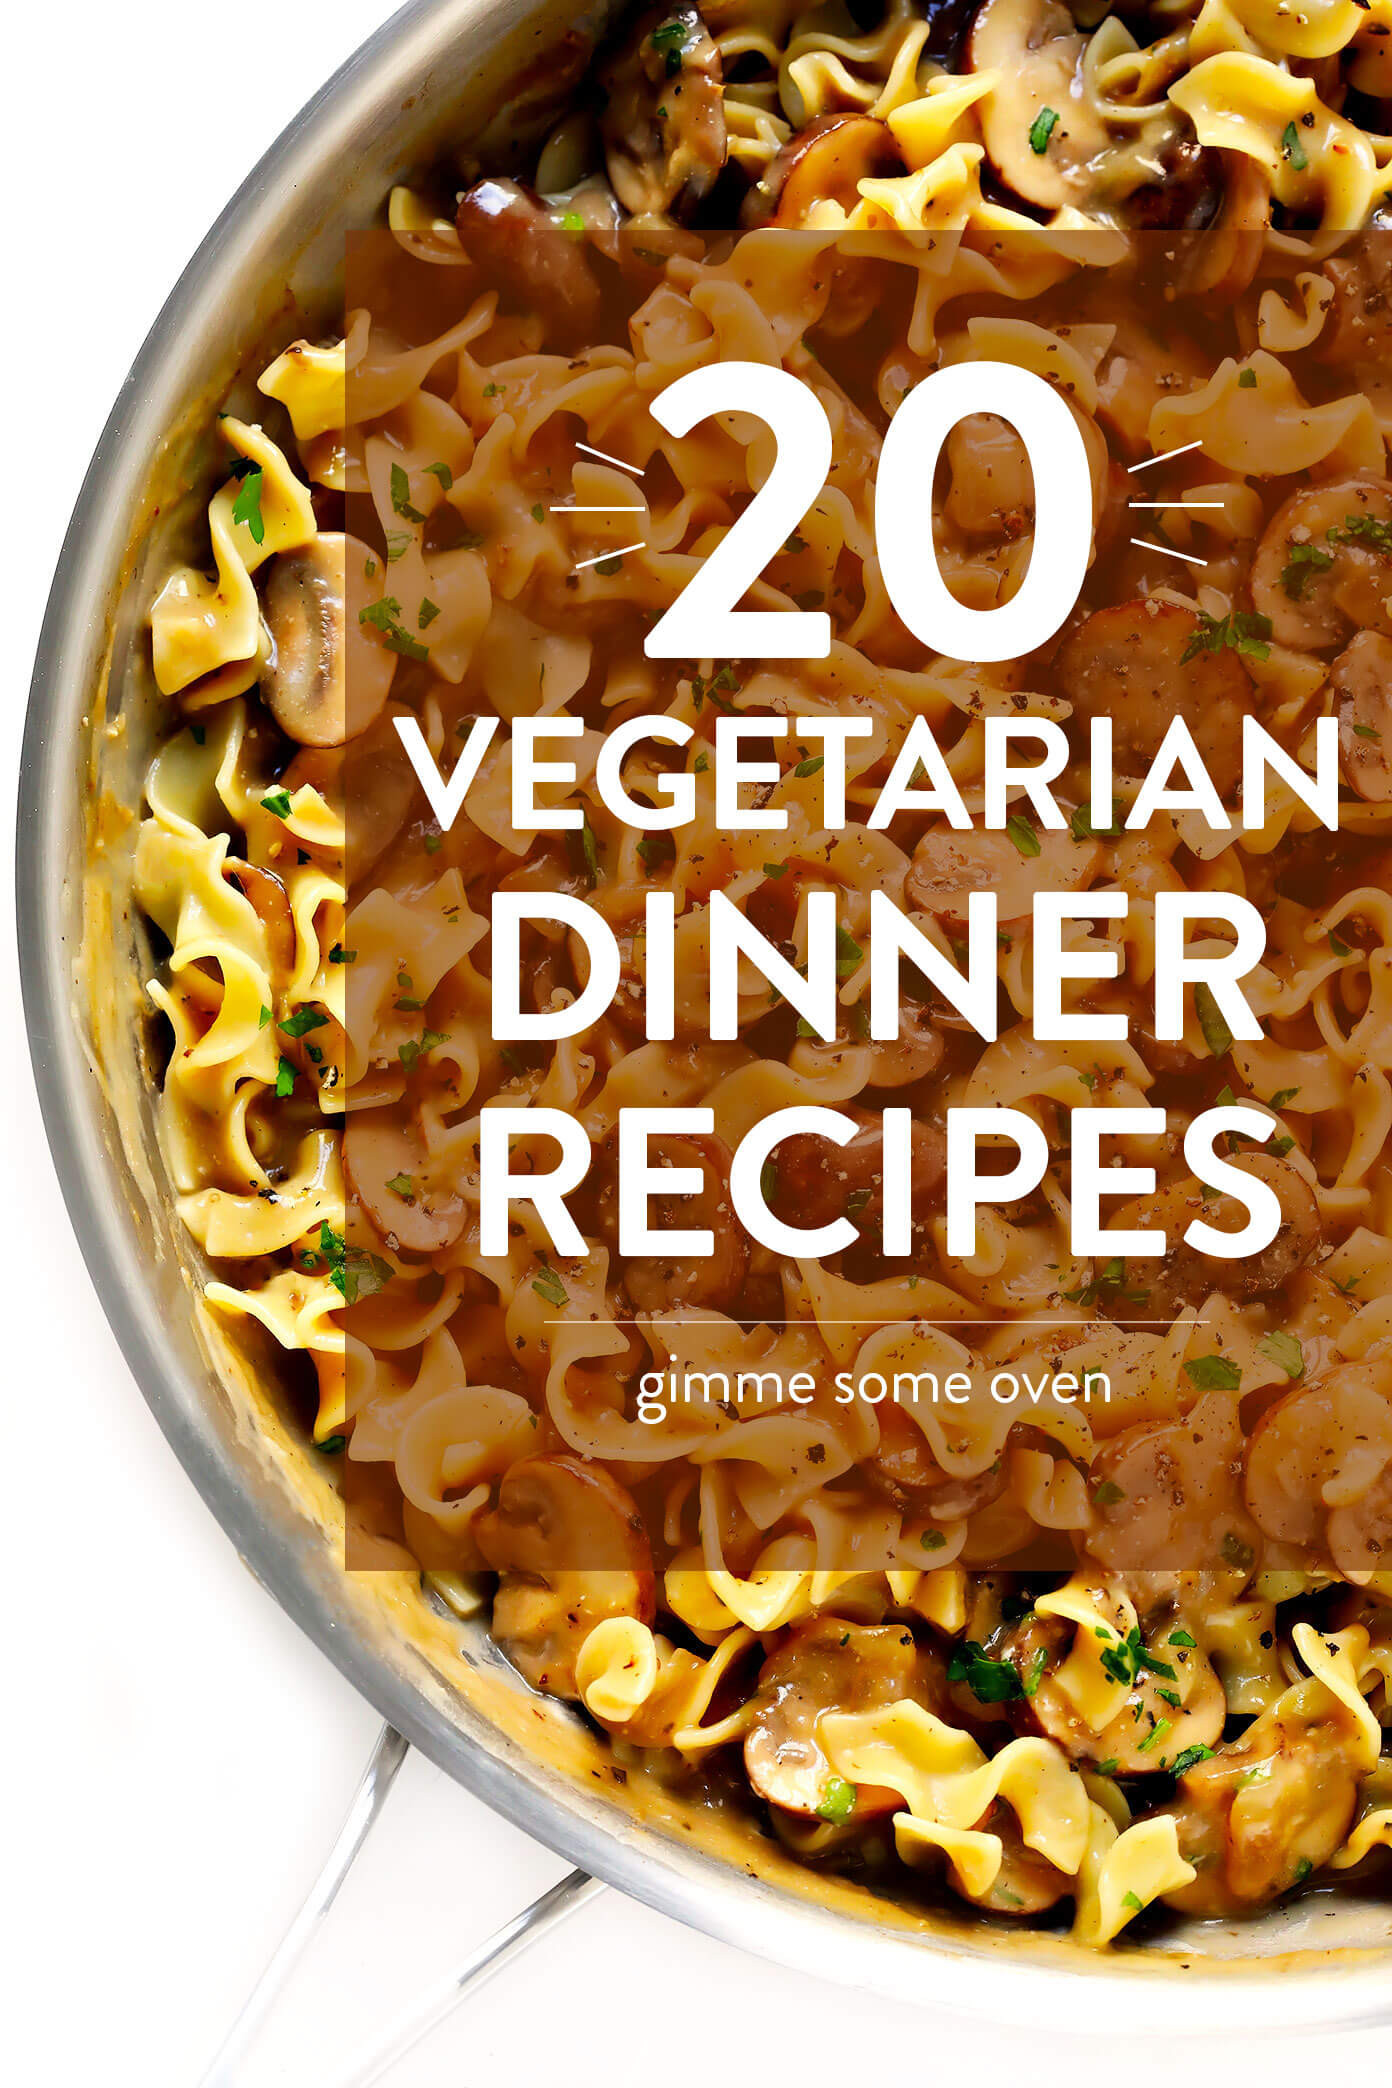 Quick Vegetarian Dinner Ideas
 20 Ve arian Dinner Recipes That Everyone Will LOVE